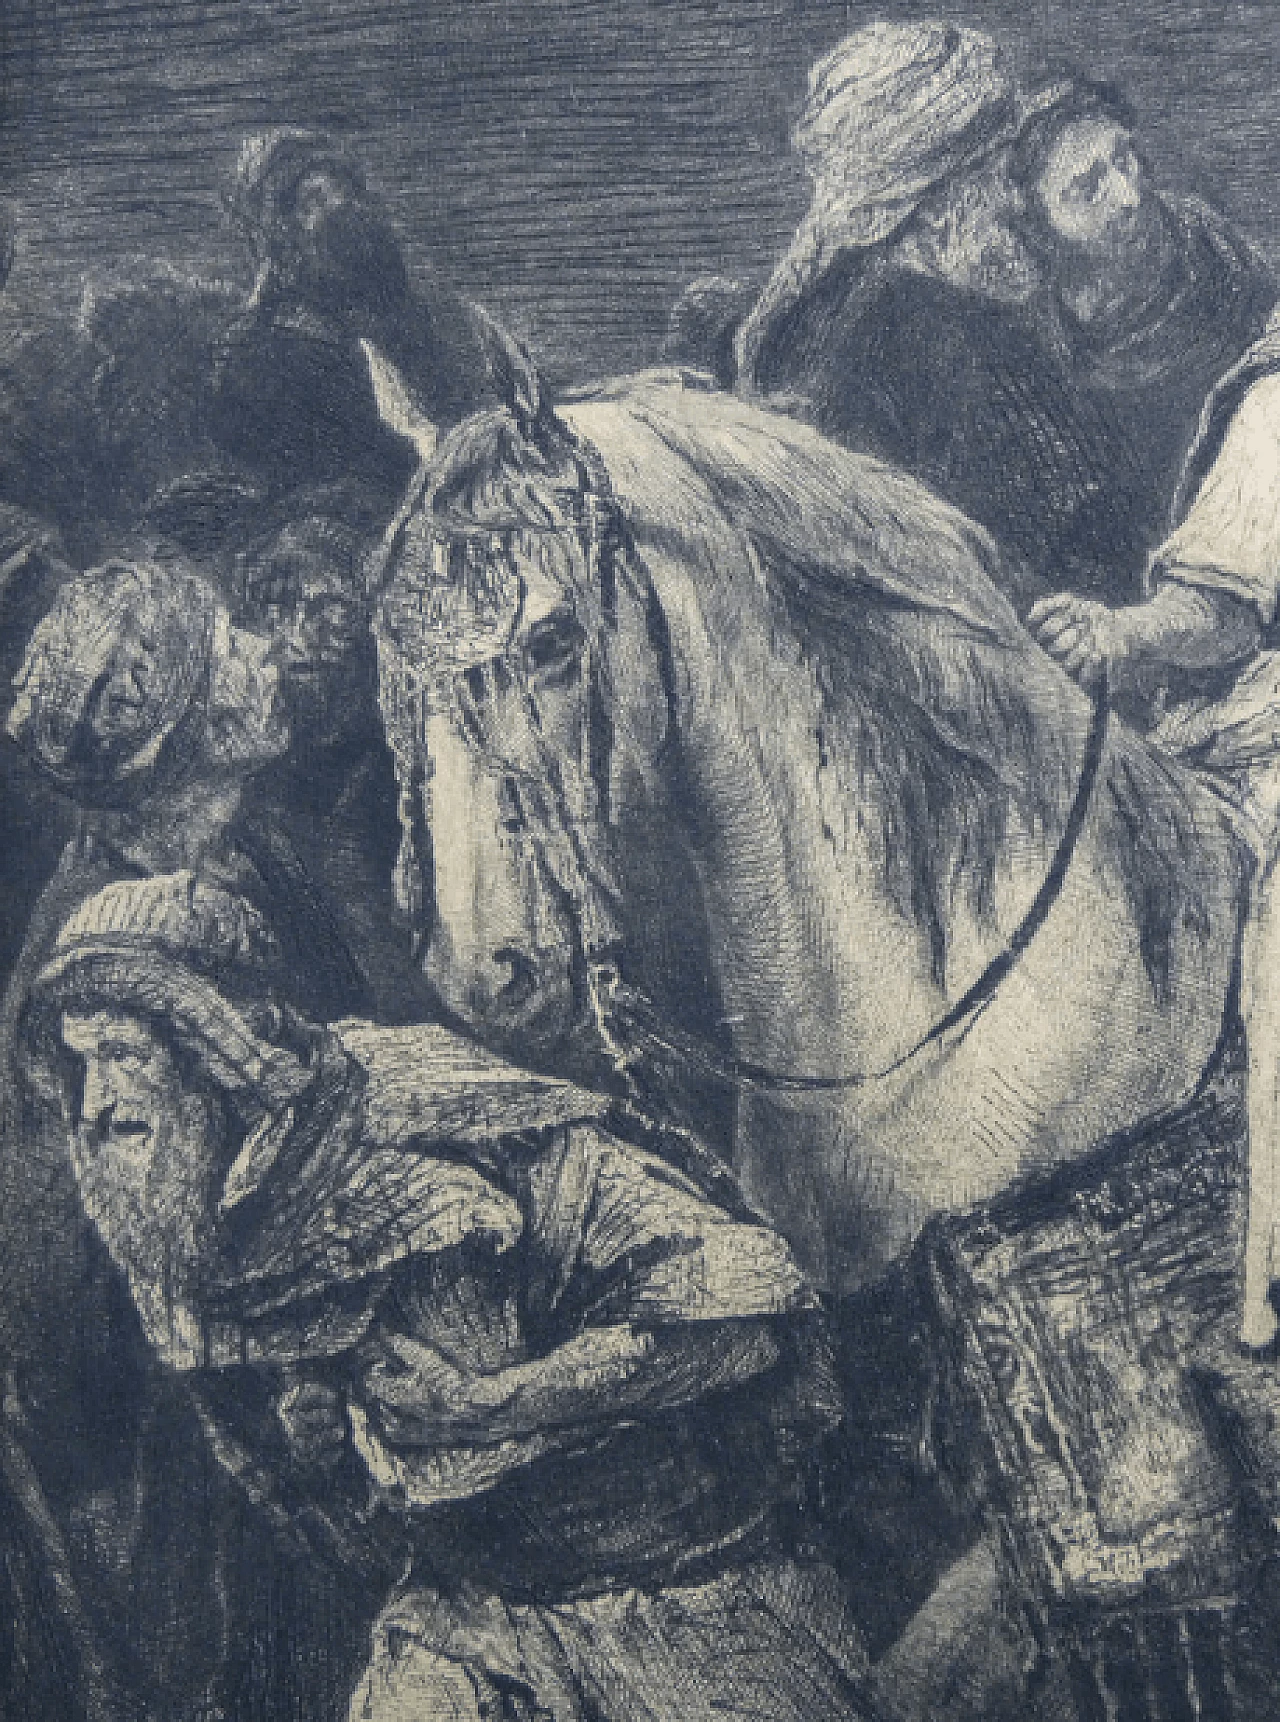 Karl Köpping and Mihály Munkácsy, Golgotha, etching, 1888 15